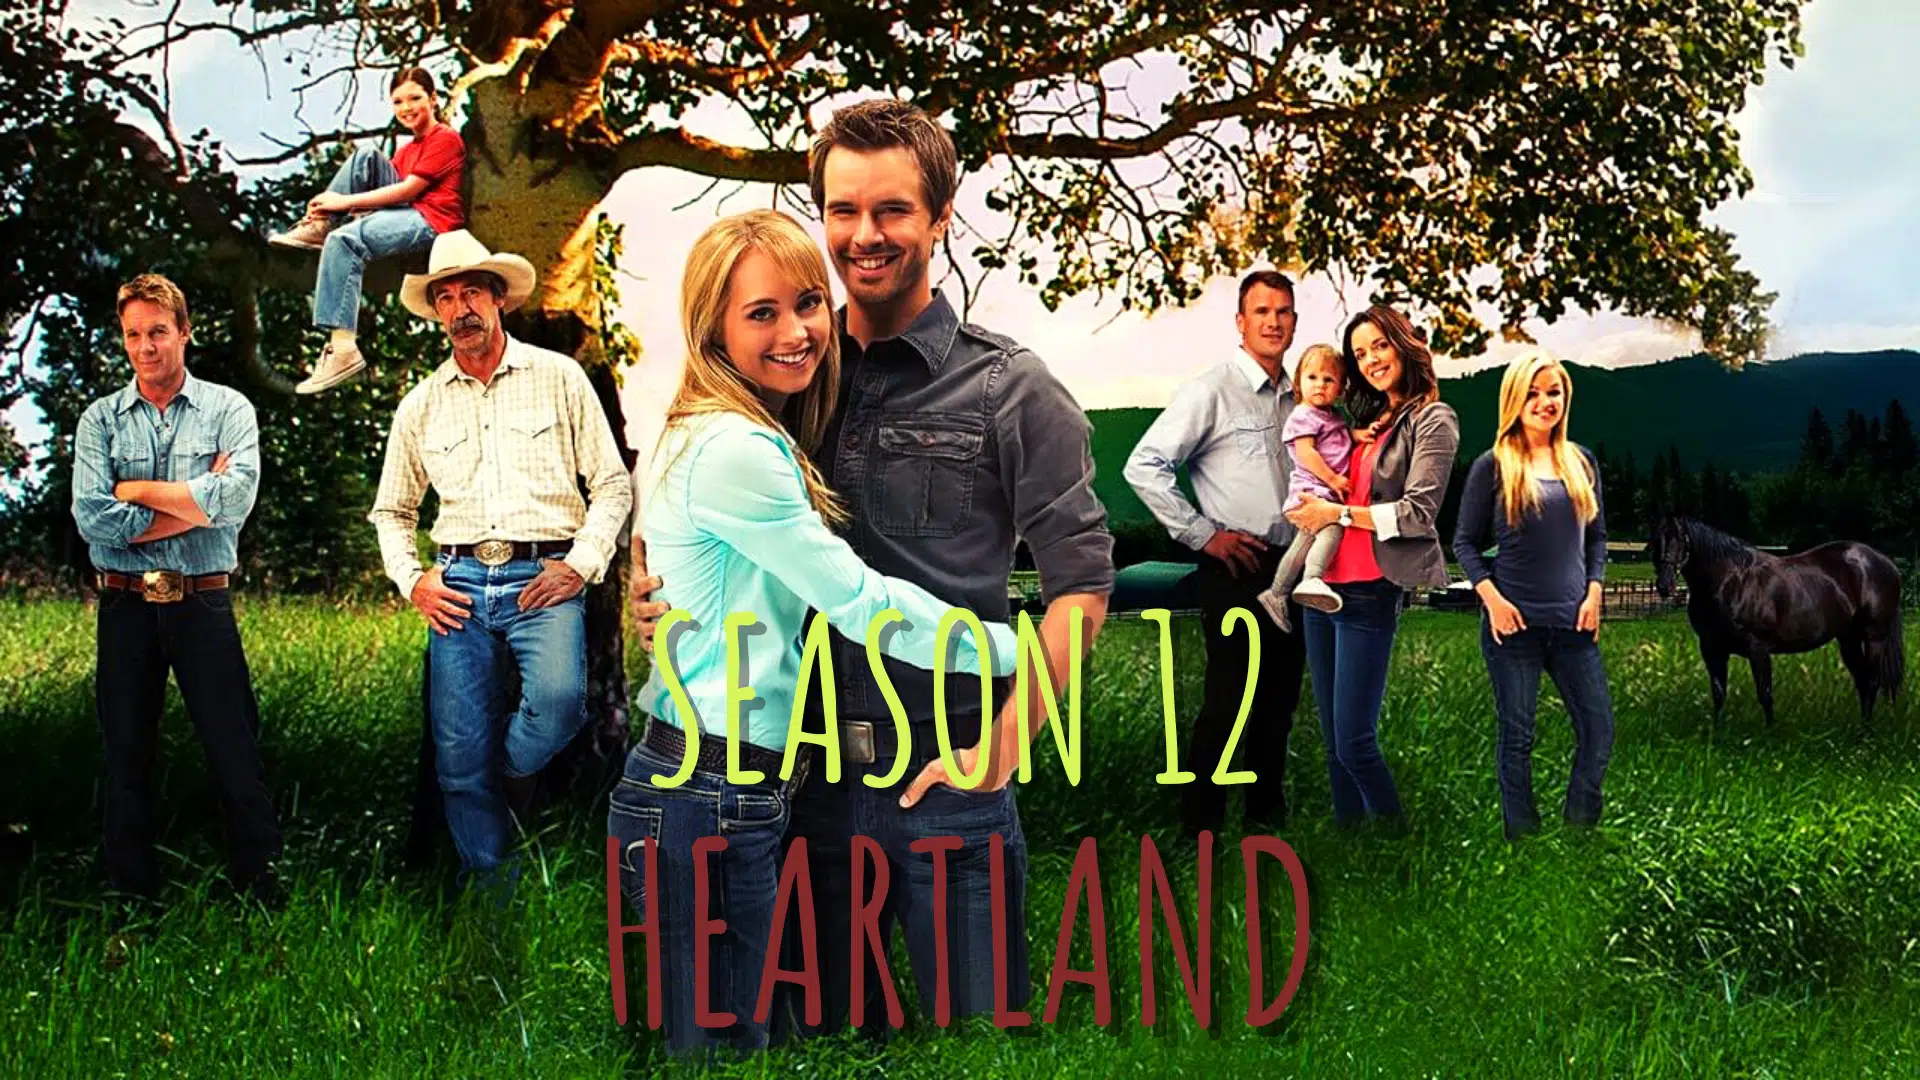 Heartland Season 12 poster.